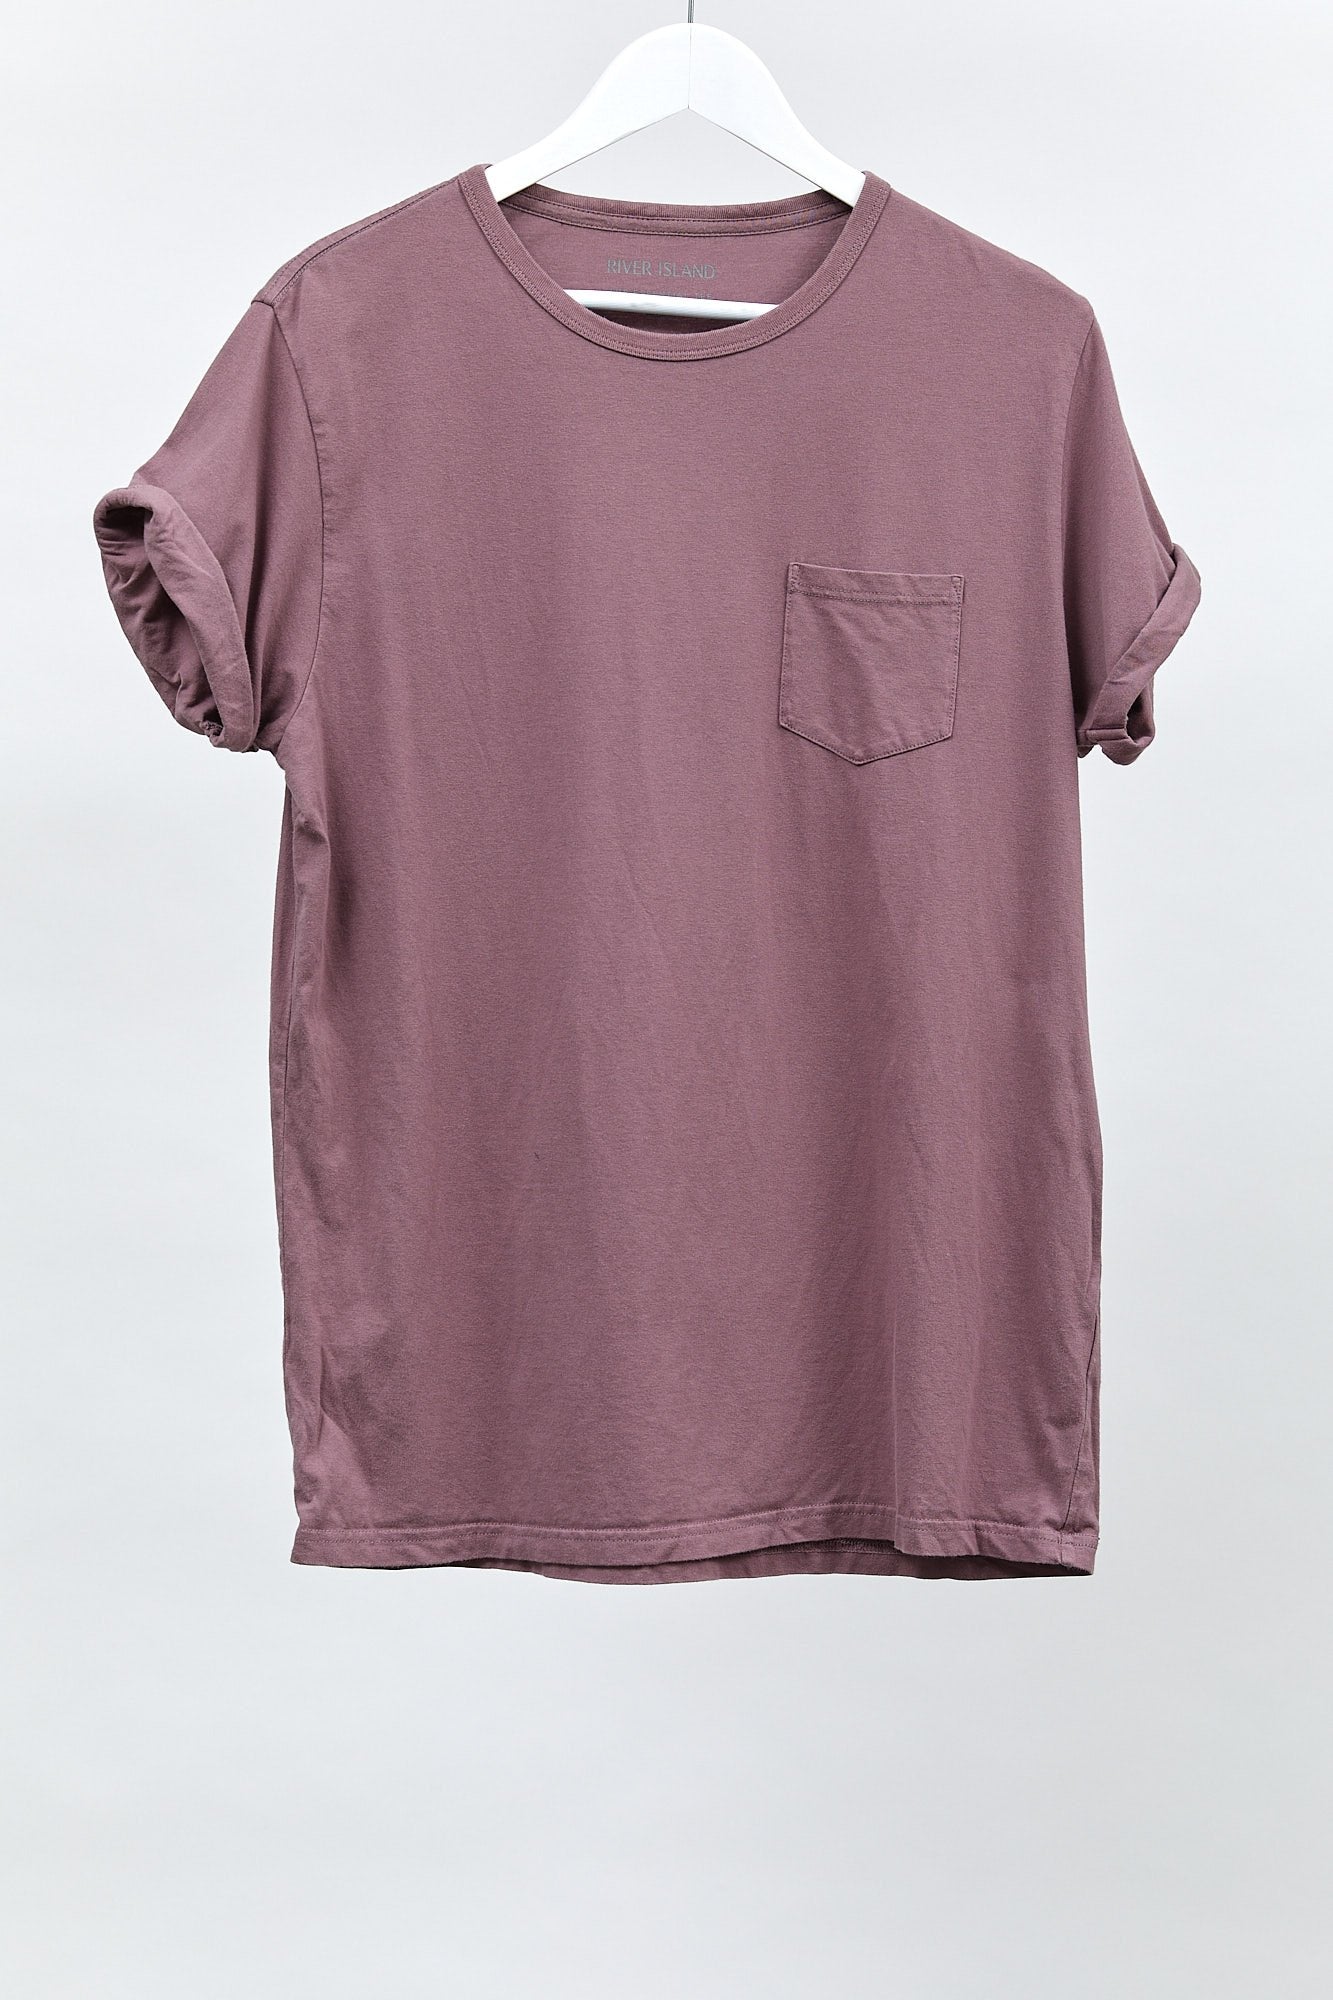 Mens Purple River Island T-Shirt: Size Medium